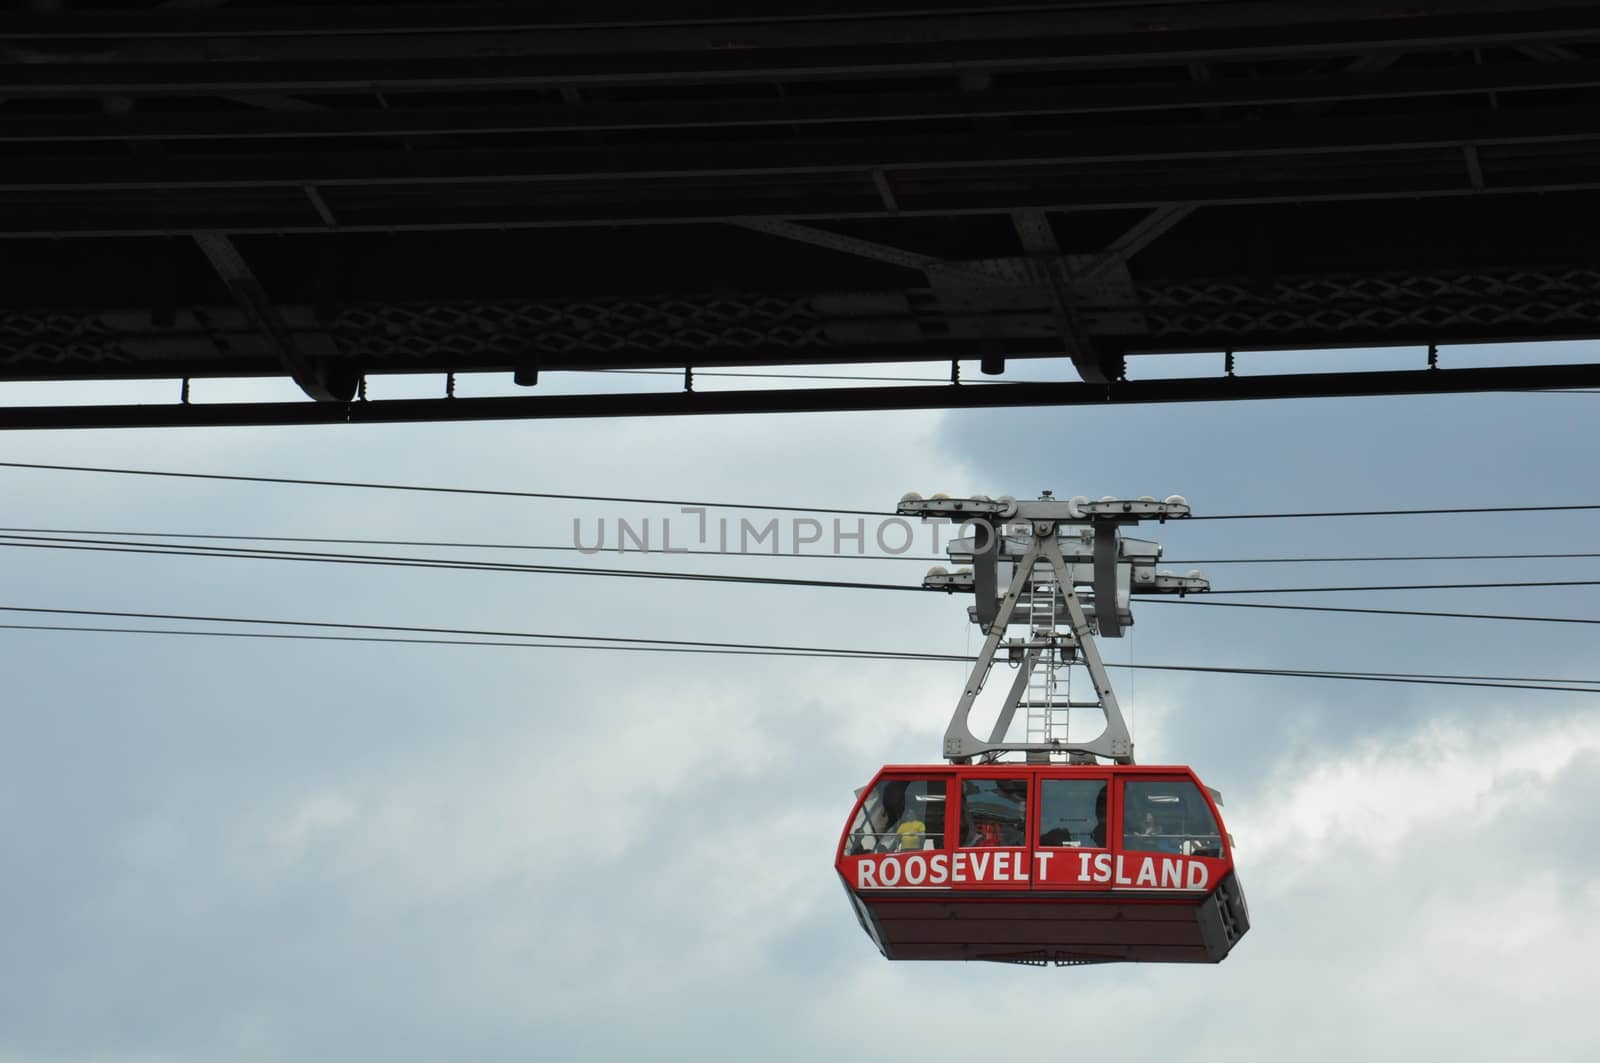 Roosevelt Island cable tram car in New York by sainaniritu